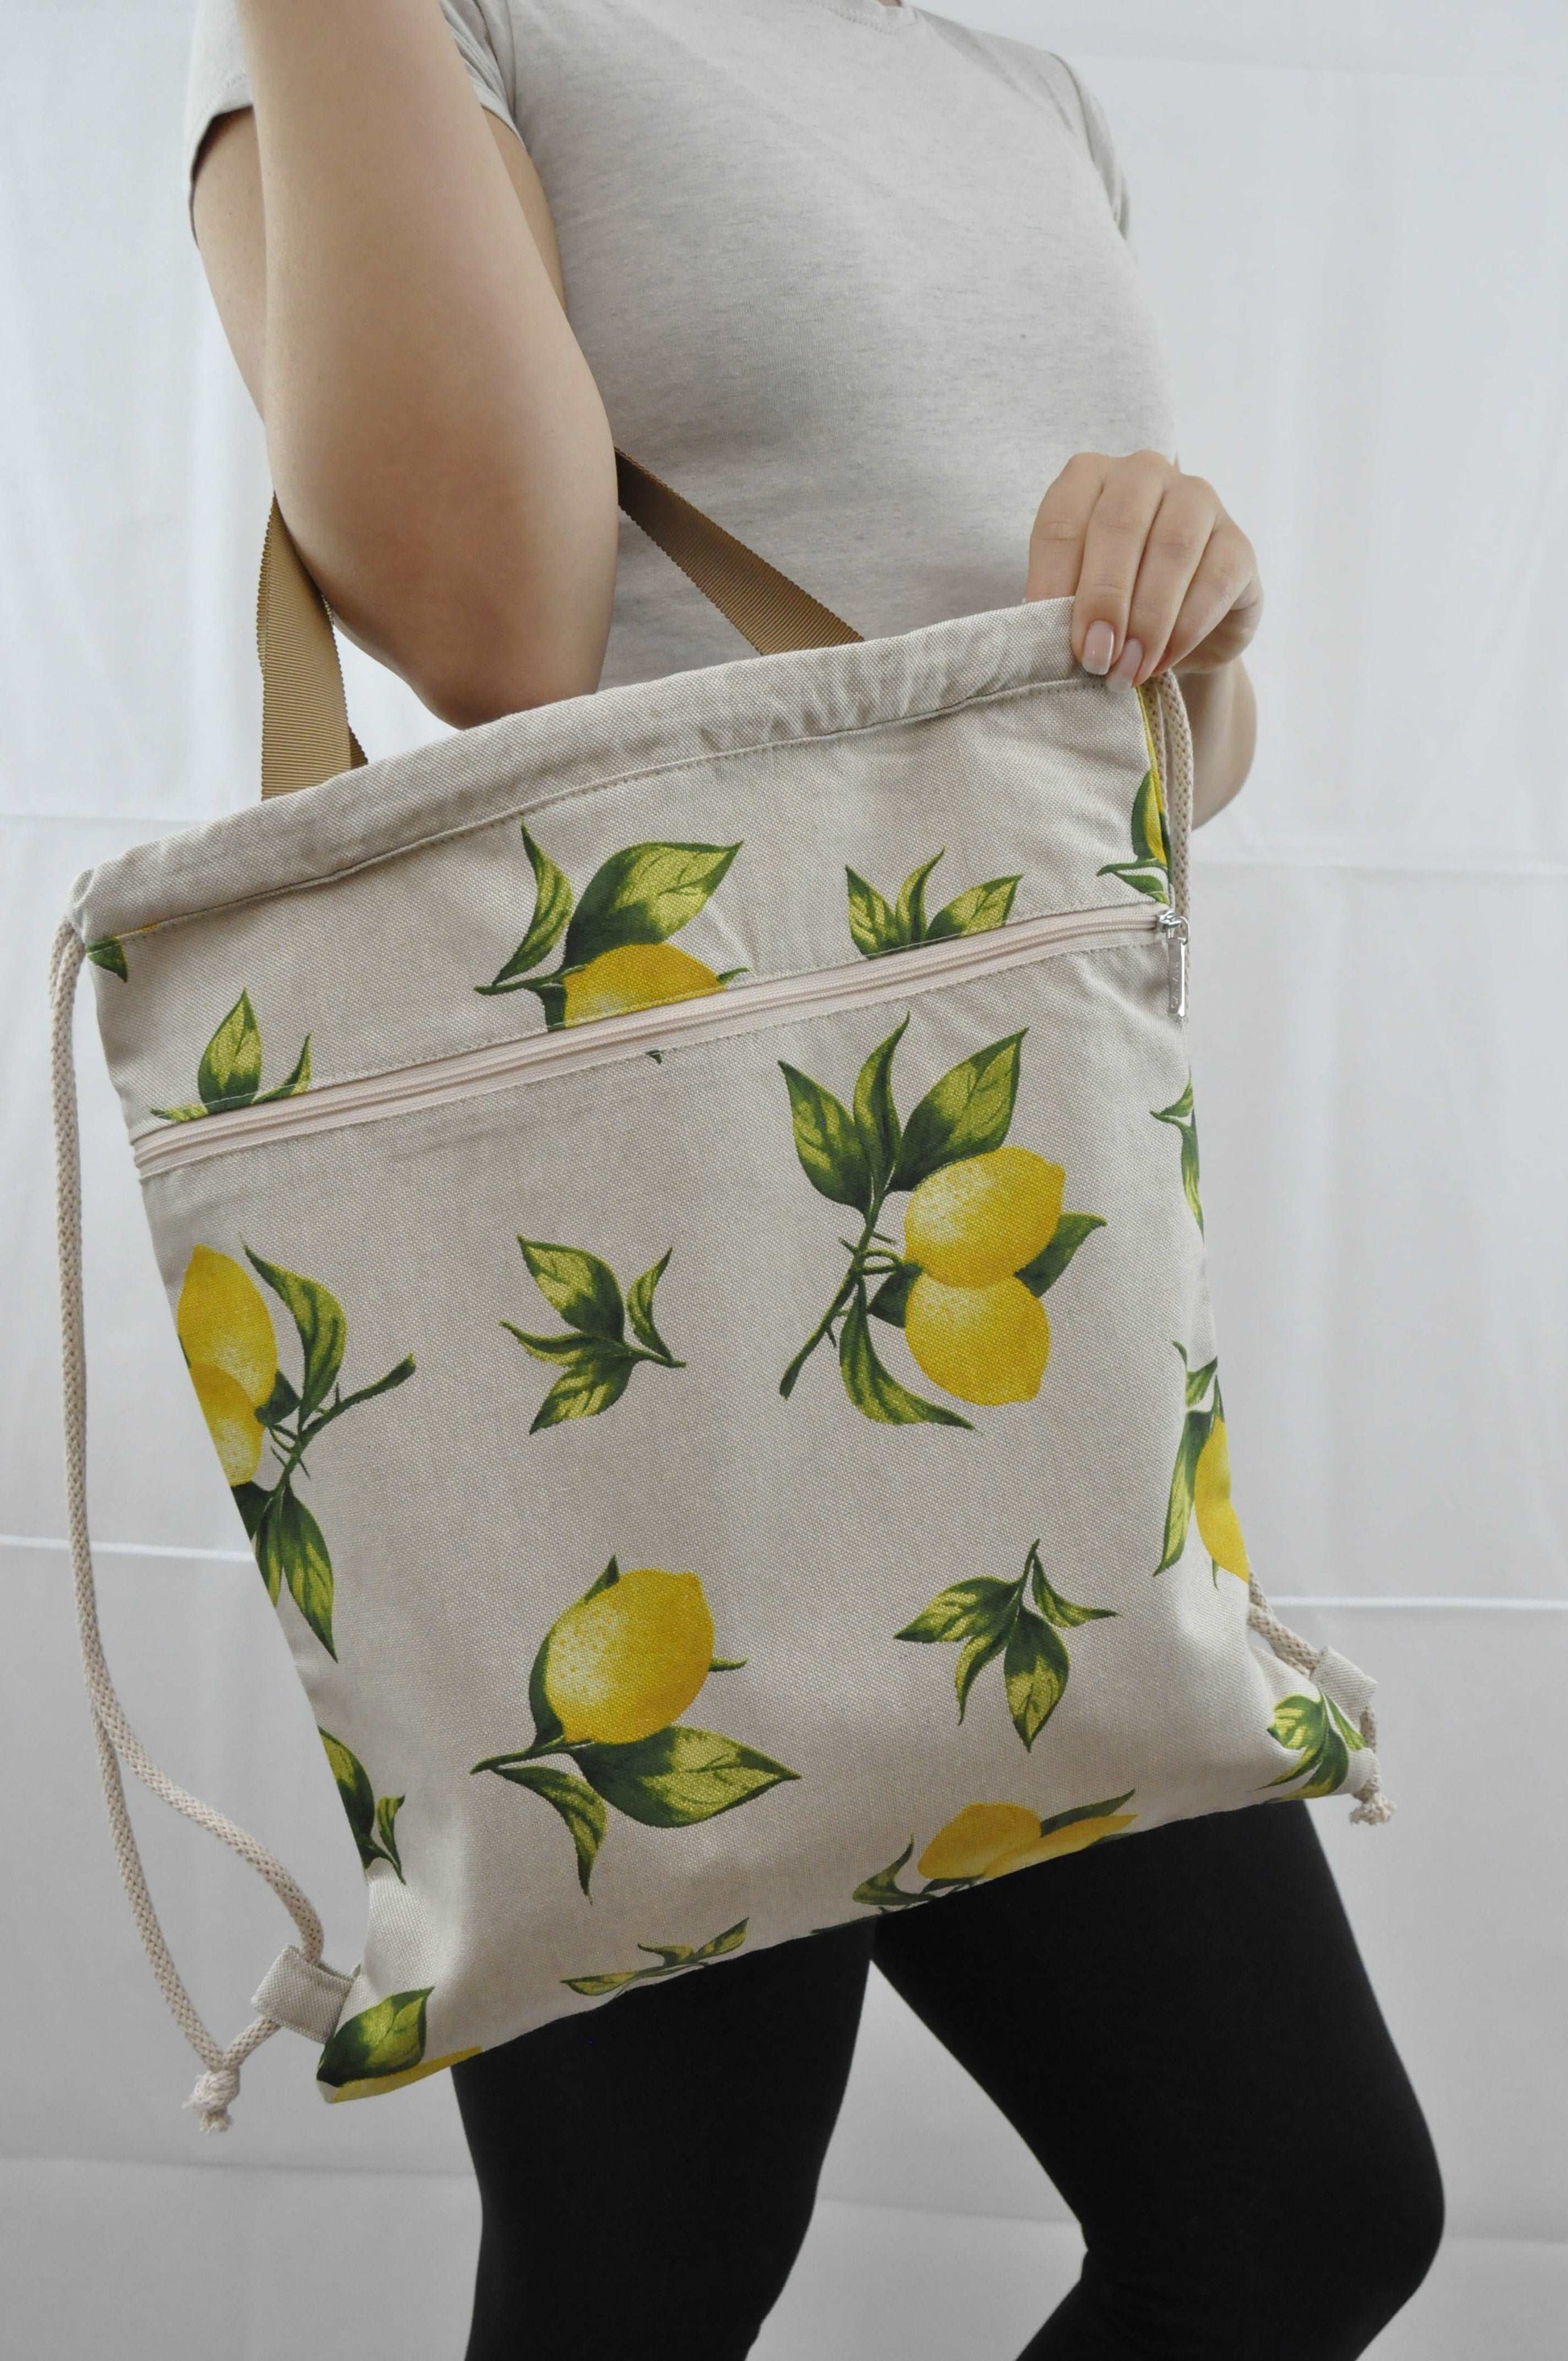 Juicy Lemons Print Backpack - Fresh and Vibrant